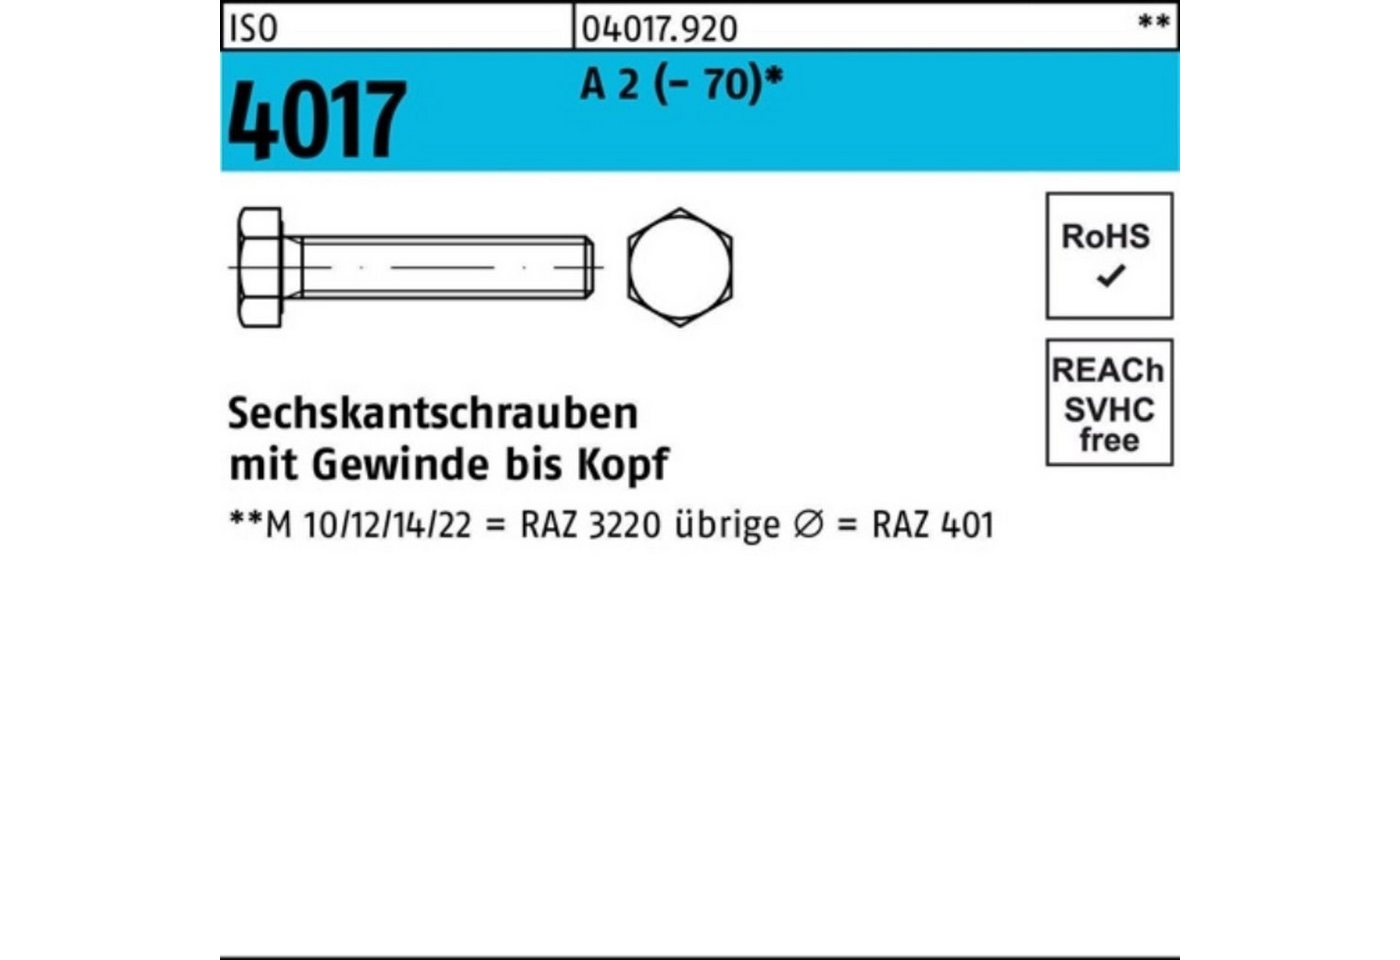 Bufab Sechskantschraube 100er Pack Sechskantschraube ISO 4017 VG M20x 40 A 2 (70) 25 Stück von Bufab